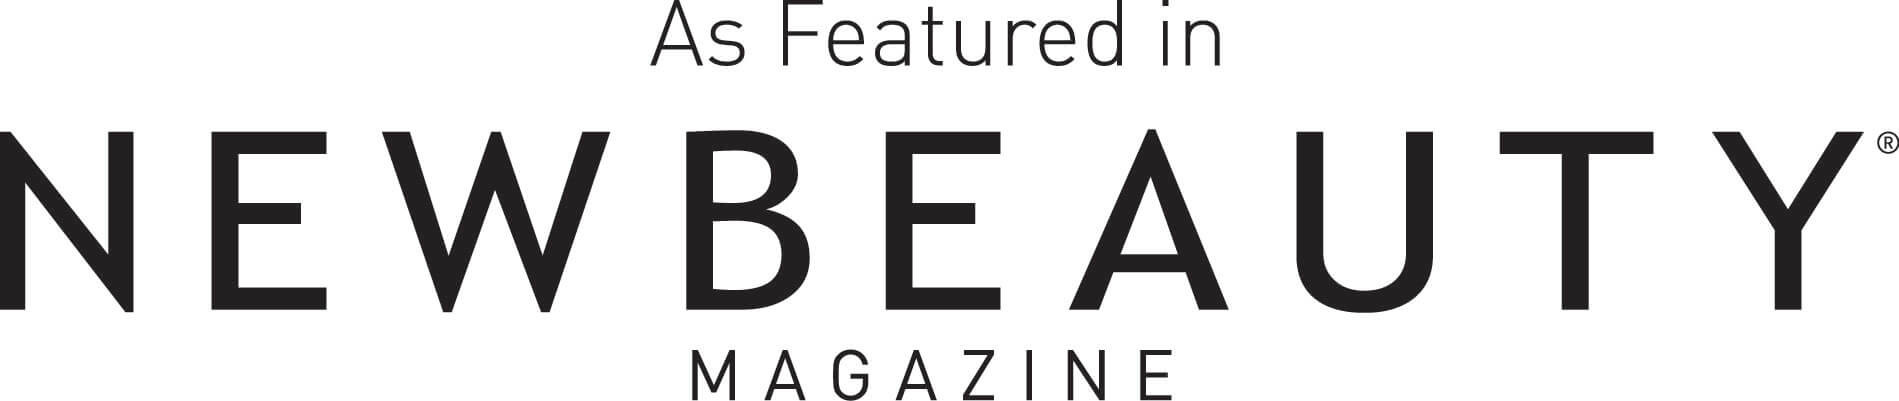 NewBeauty_Logo_Black_Magazine_As_Featured (1)